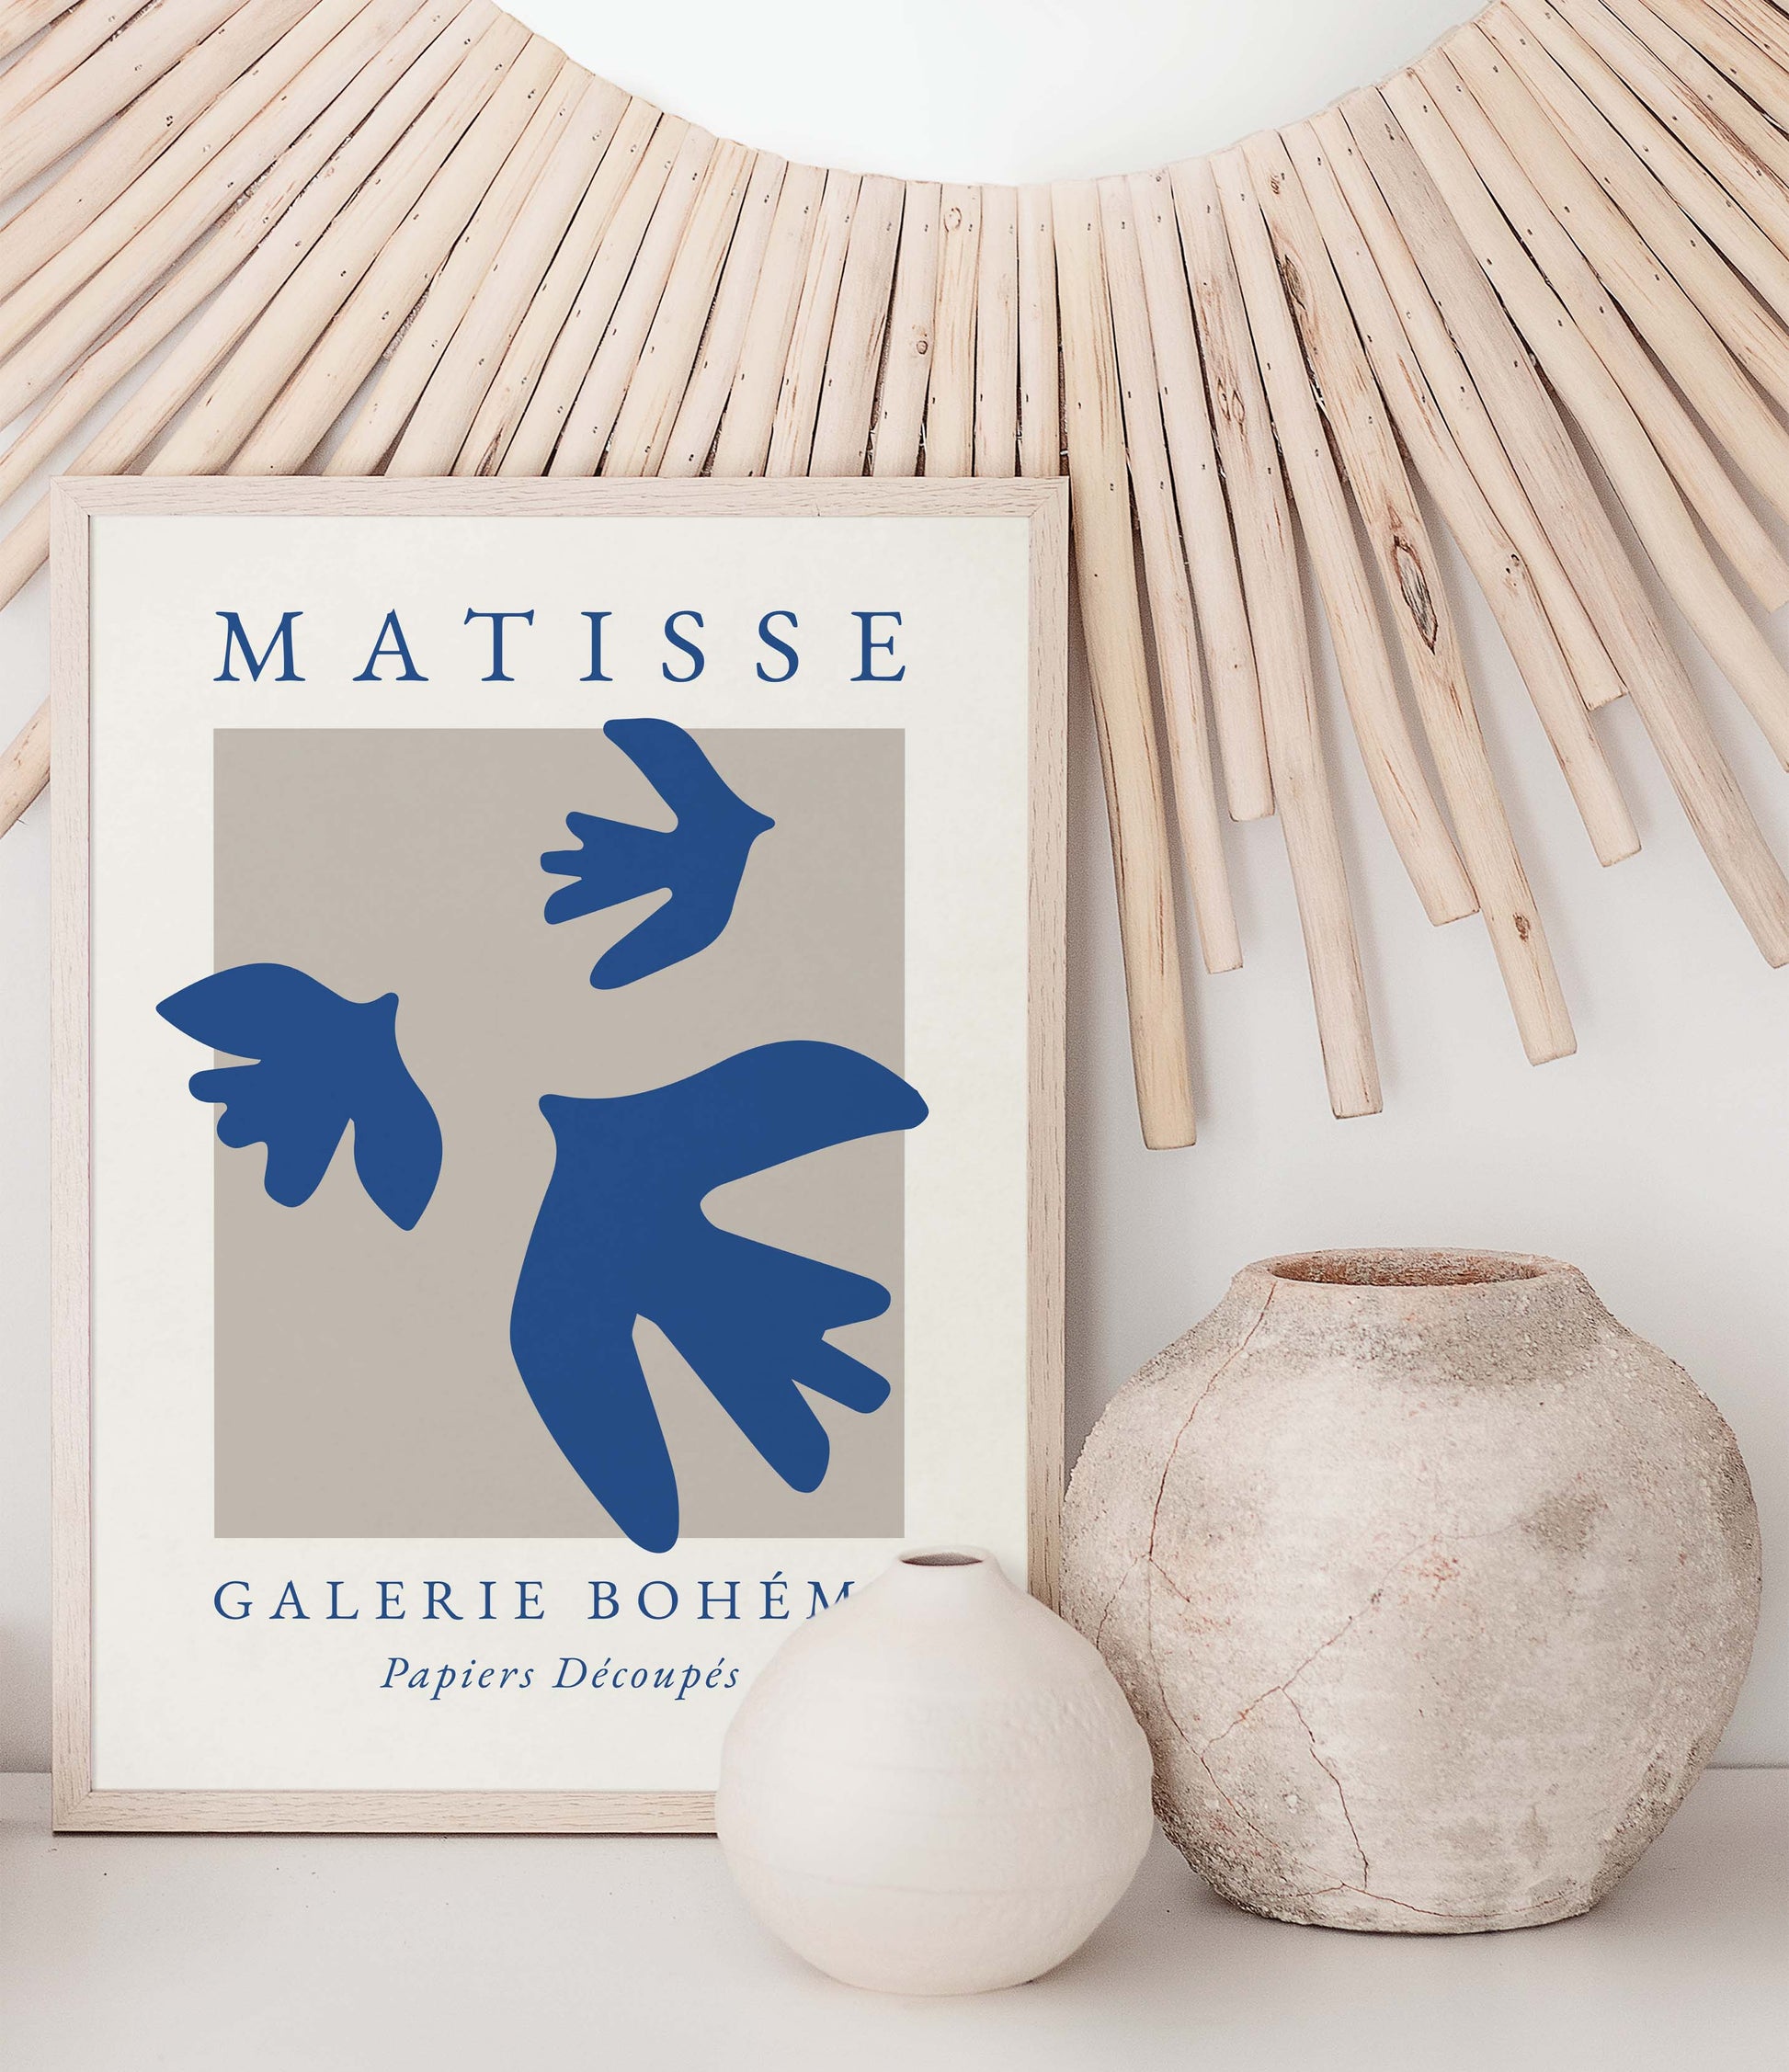 Bird print in Matisse style in blue